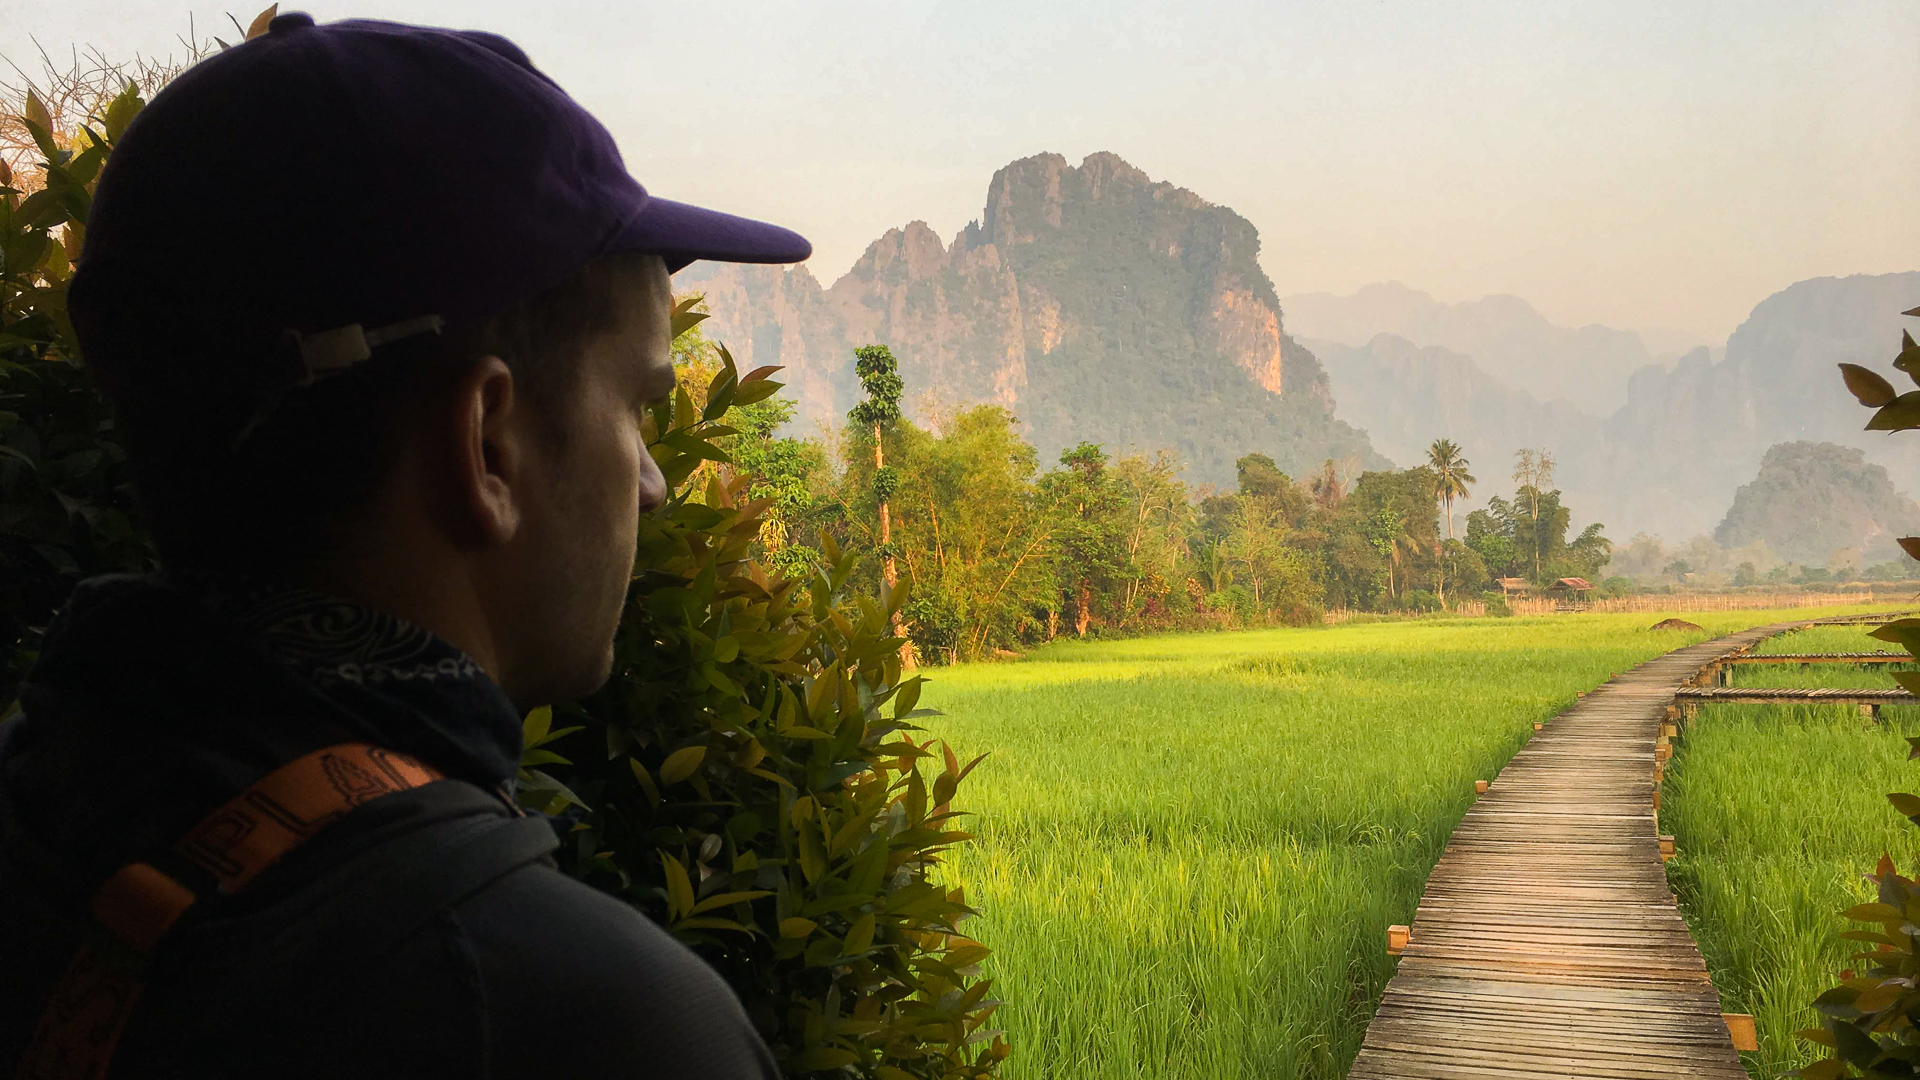 Samuel Haddad looks out across a mountainous landscape in Vientiane, Laos.